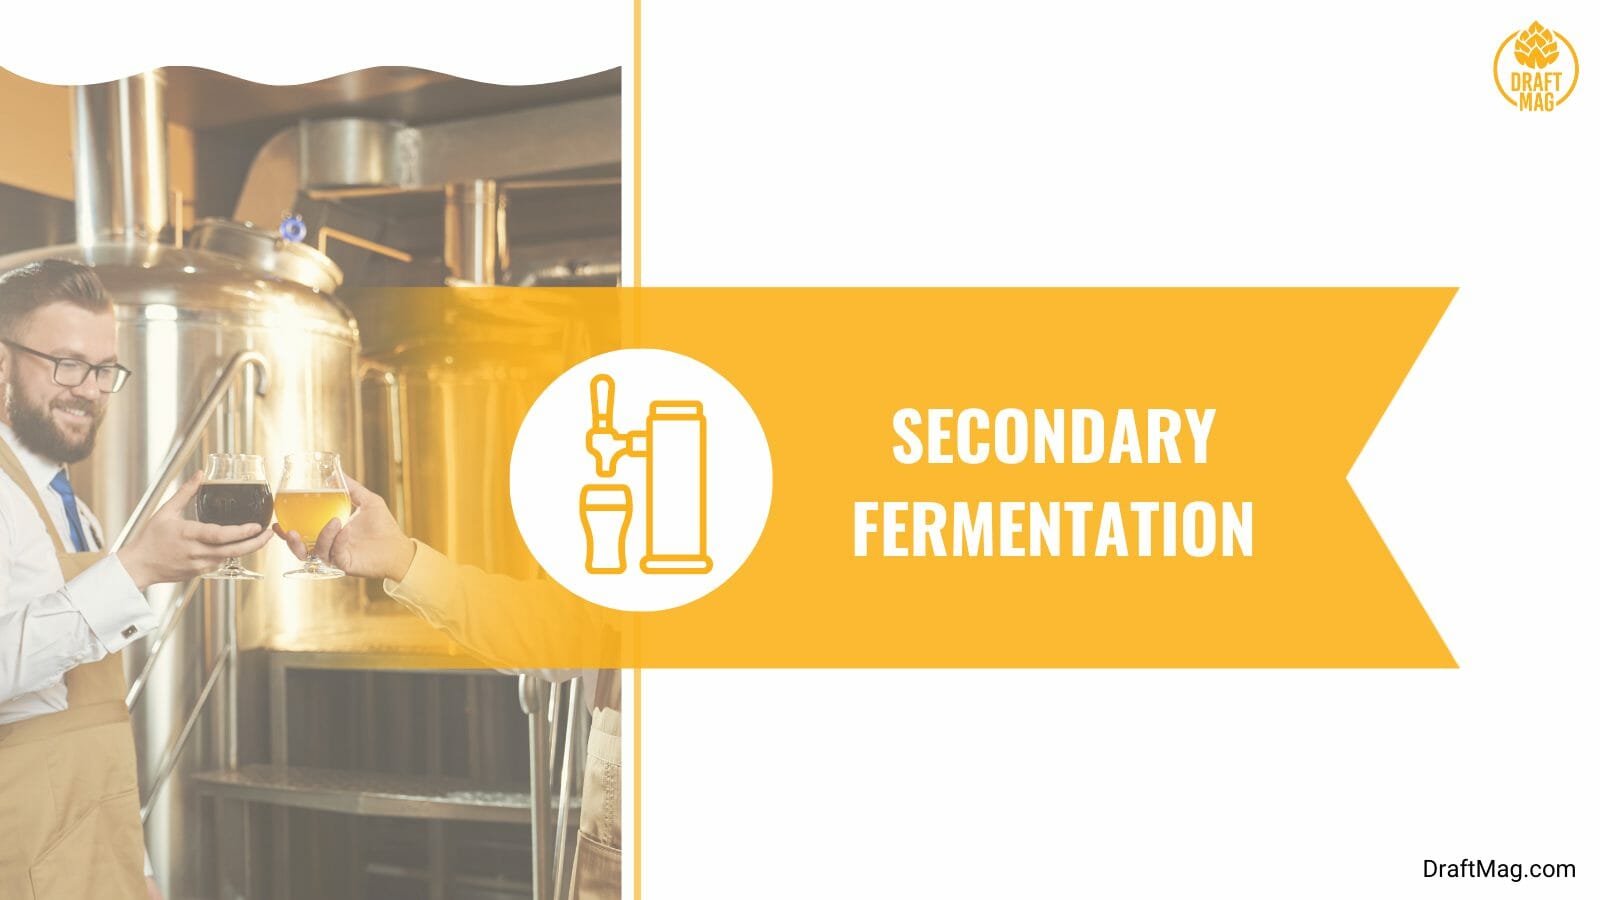 Secondary fermentation of beer